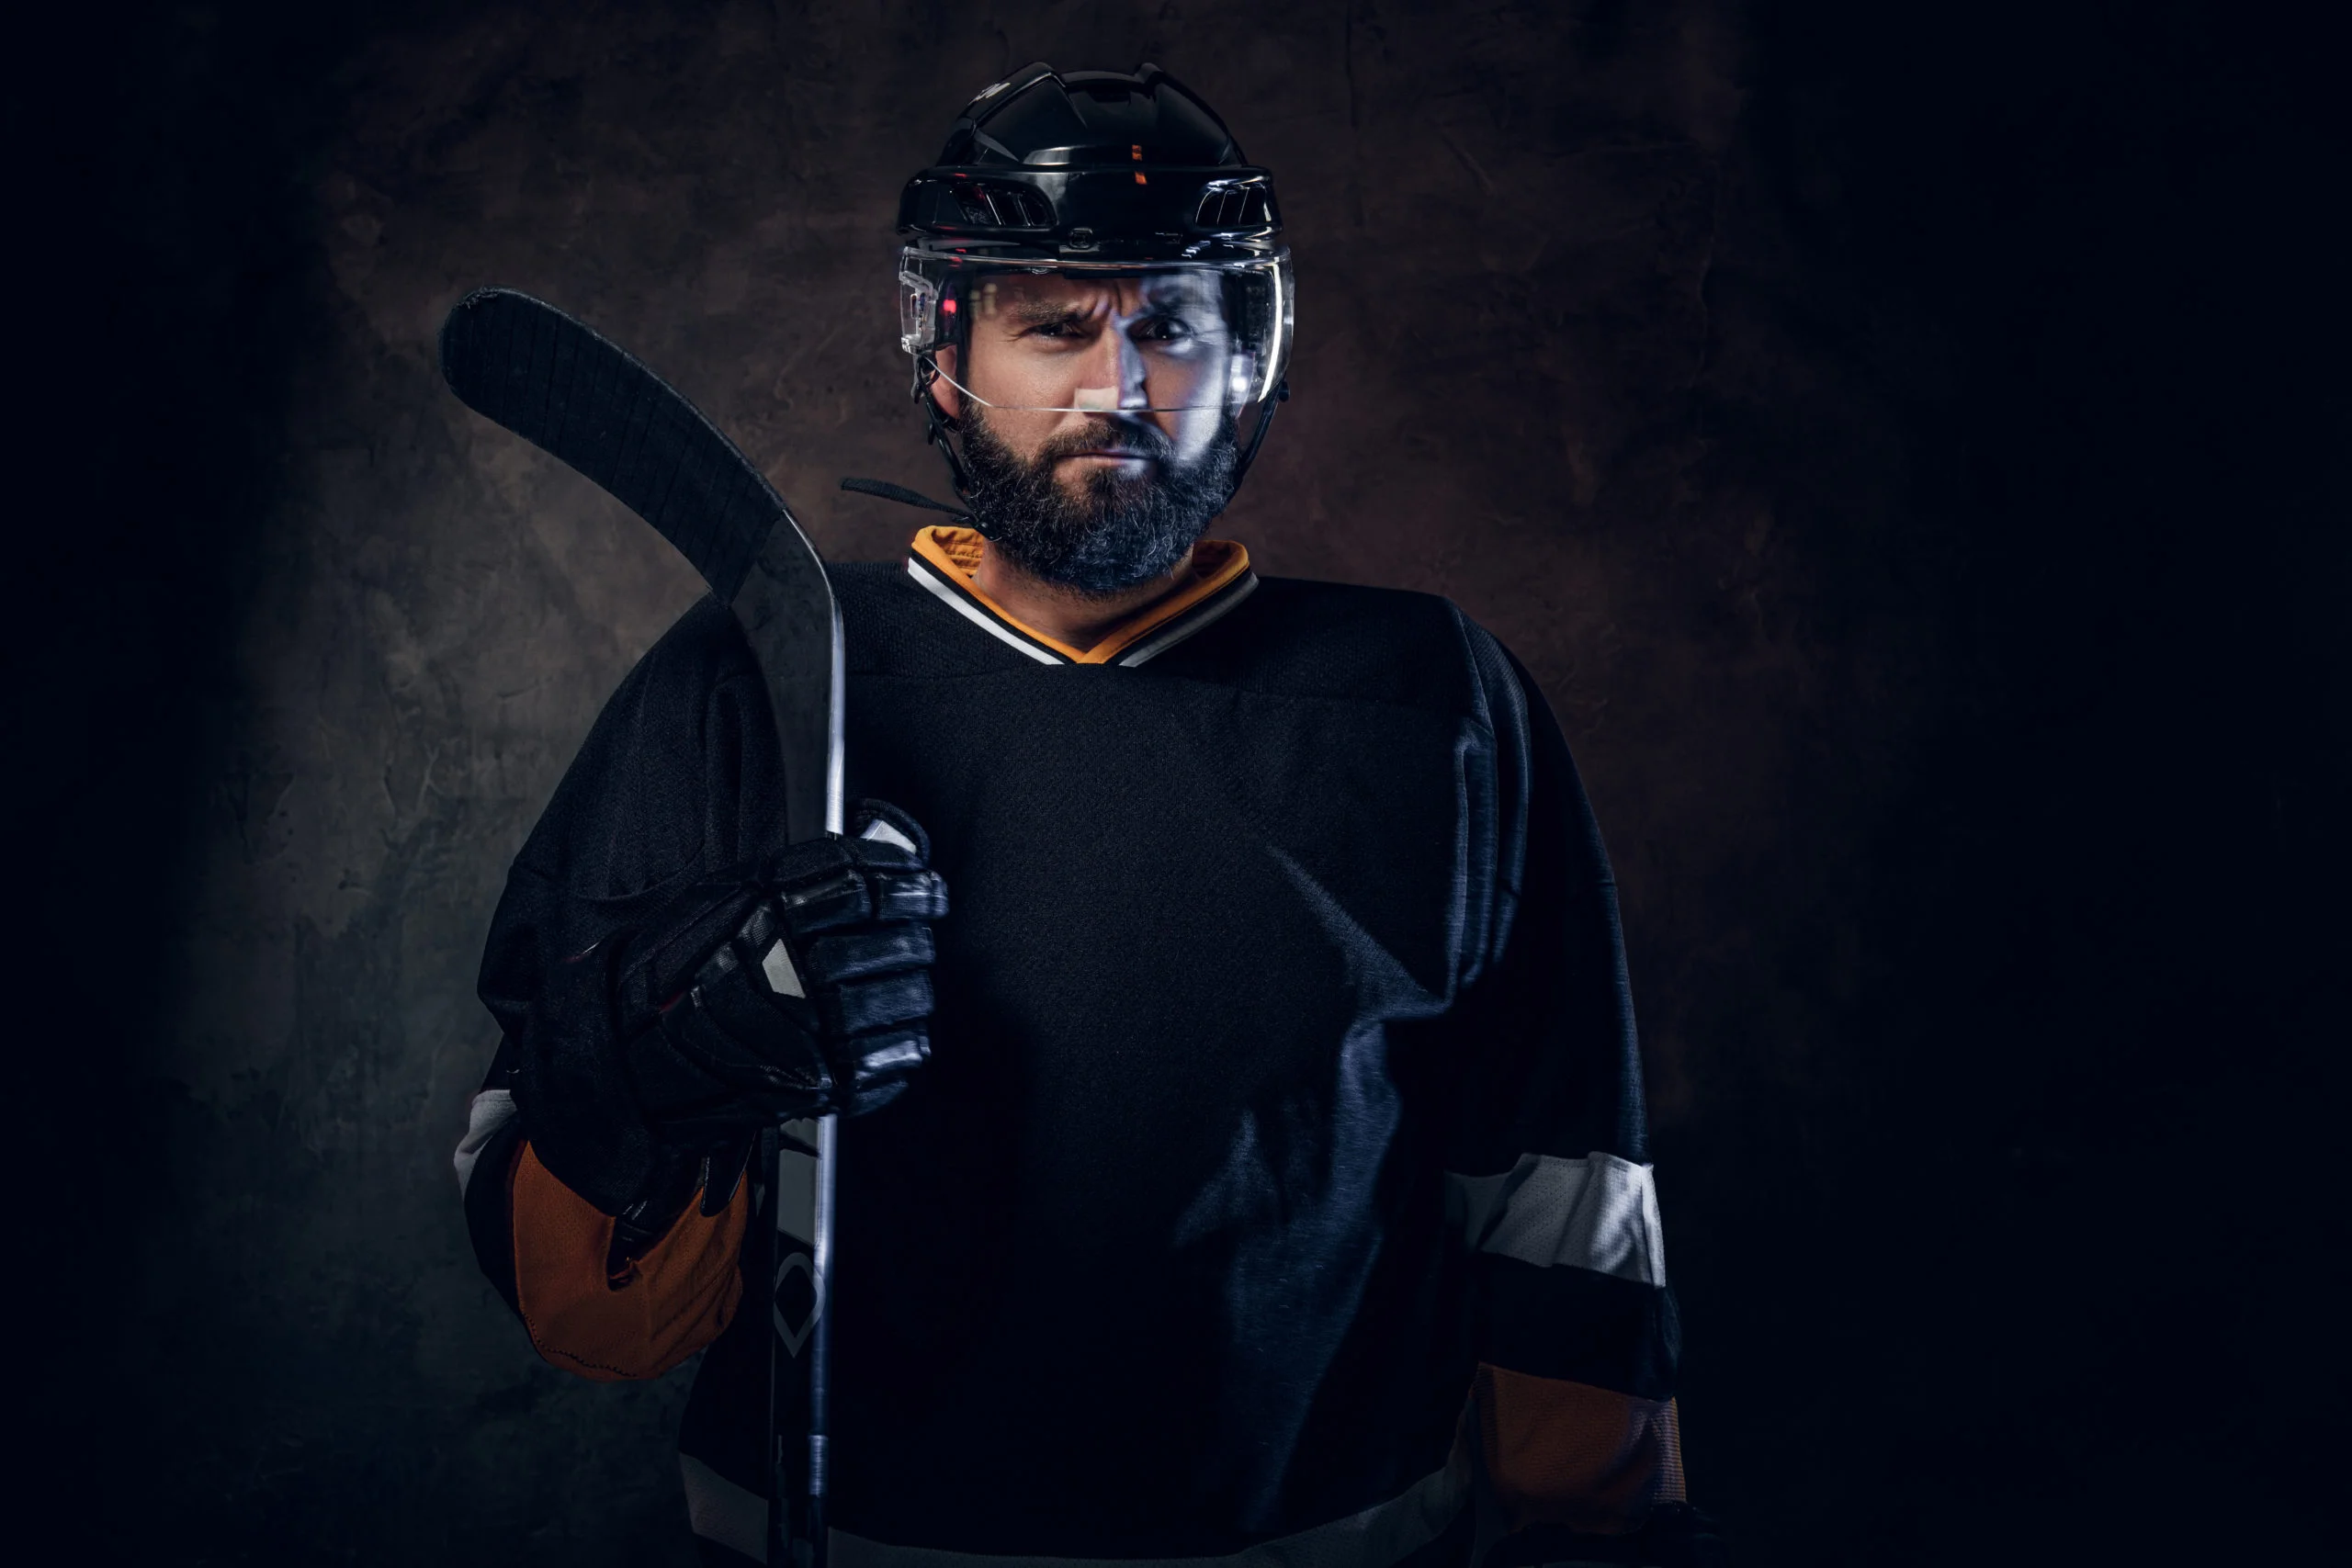 Portrait of professional hockey player